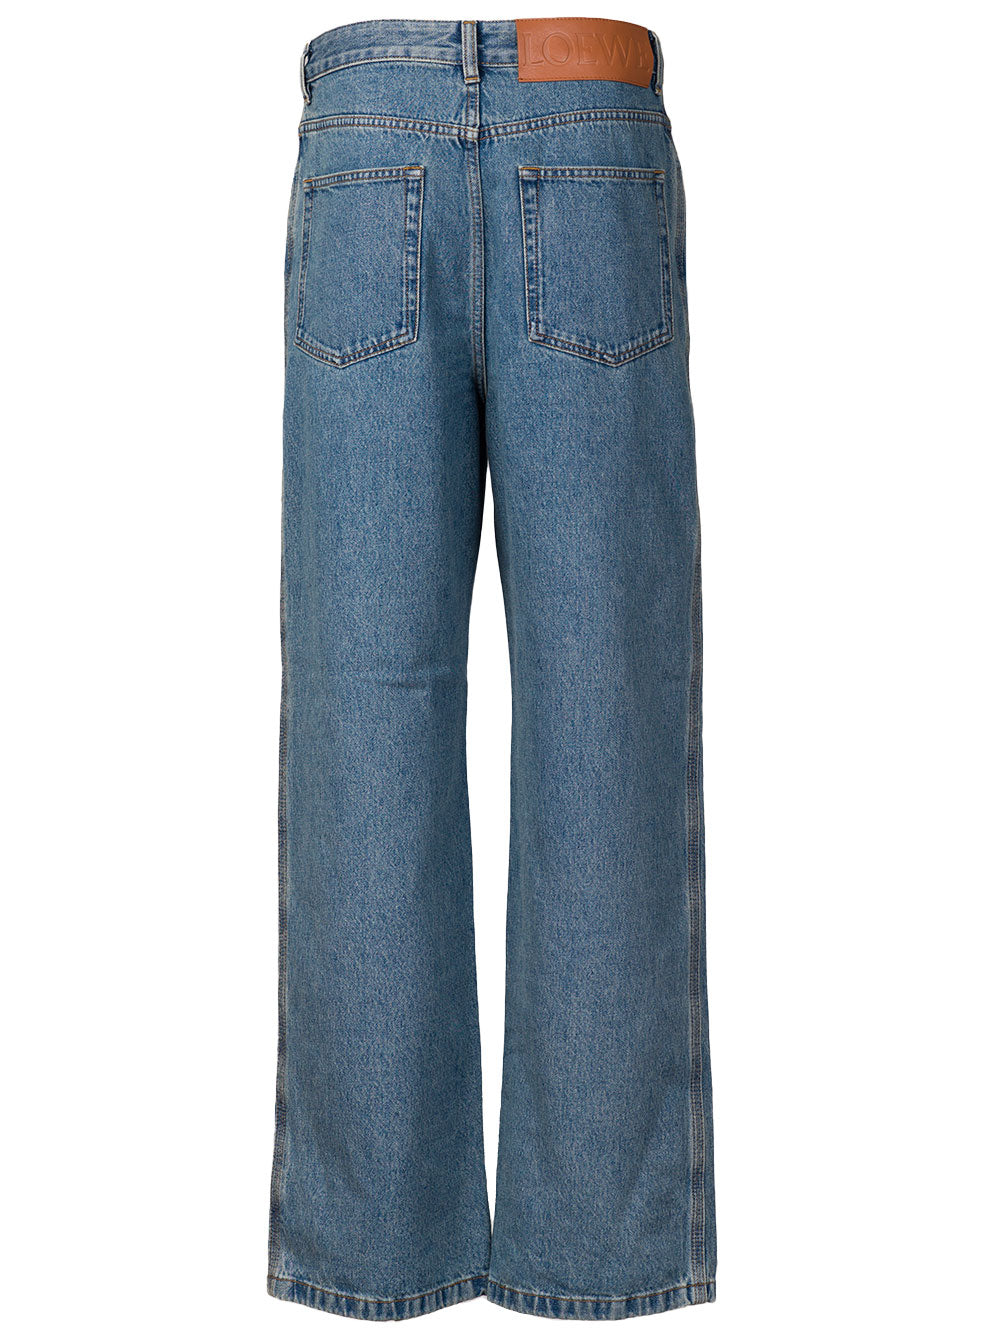 Anagram jeans